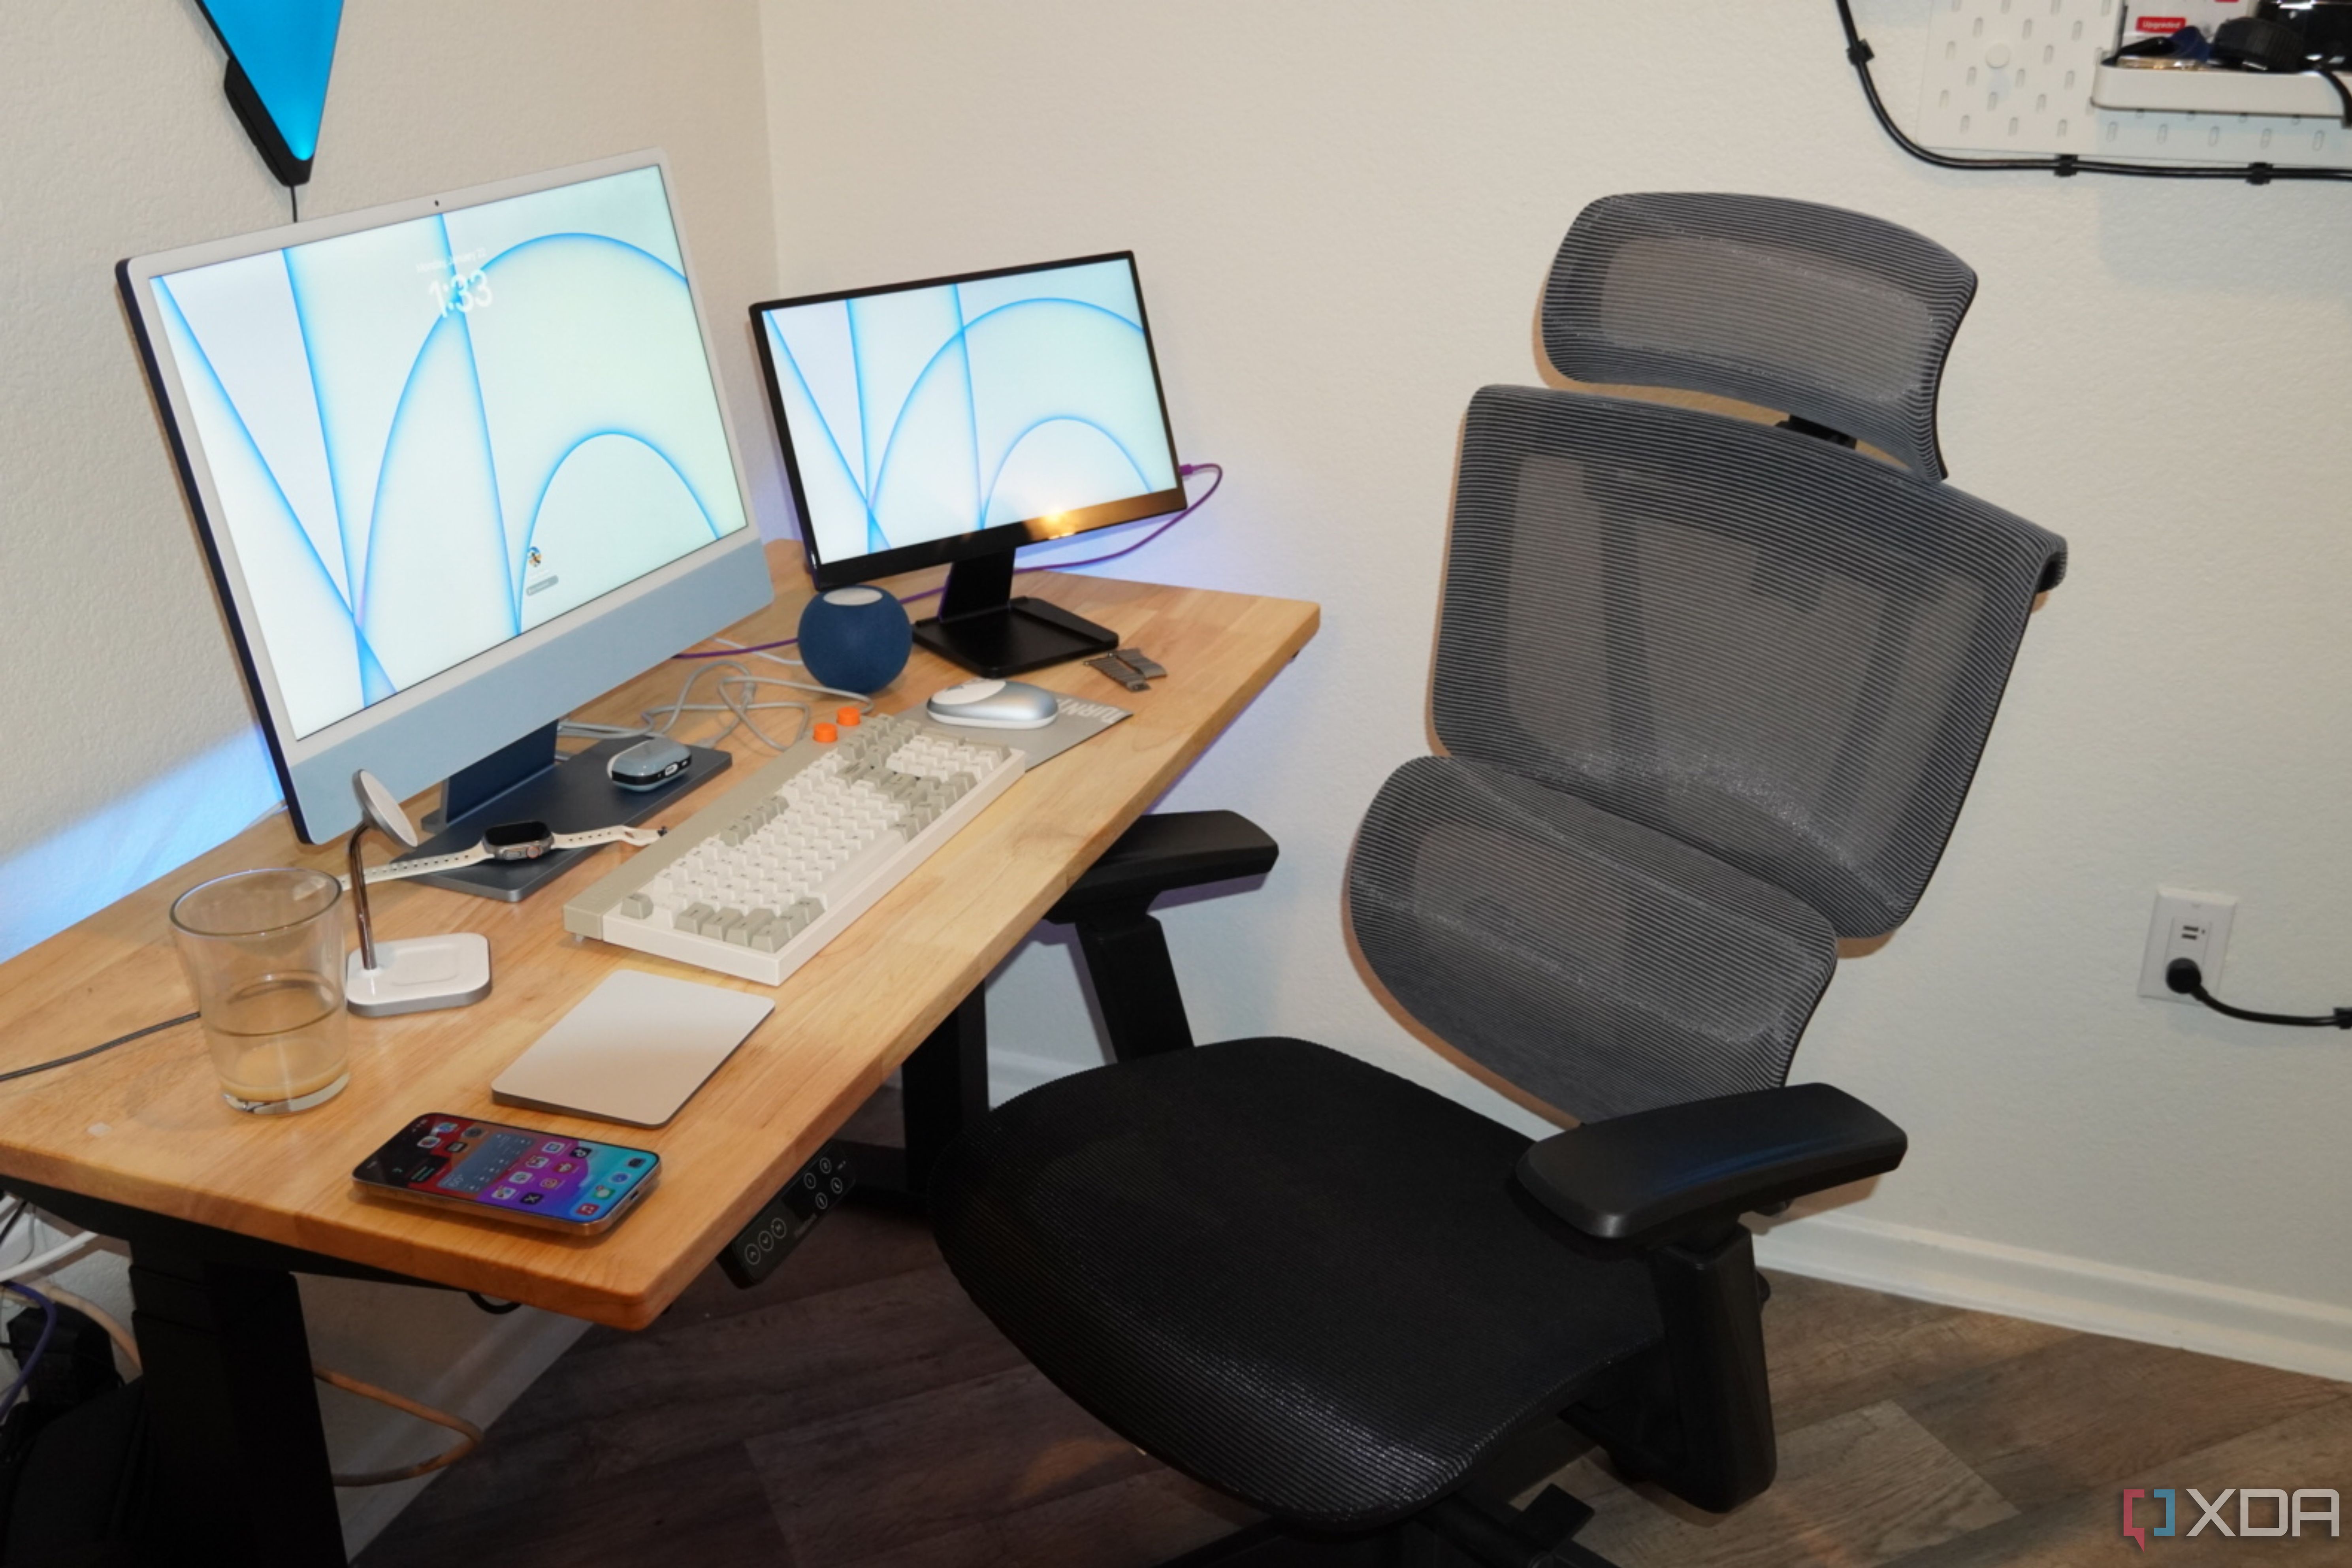 The FlexiSpot C7 chair at a desk.